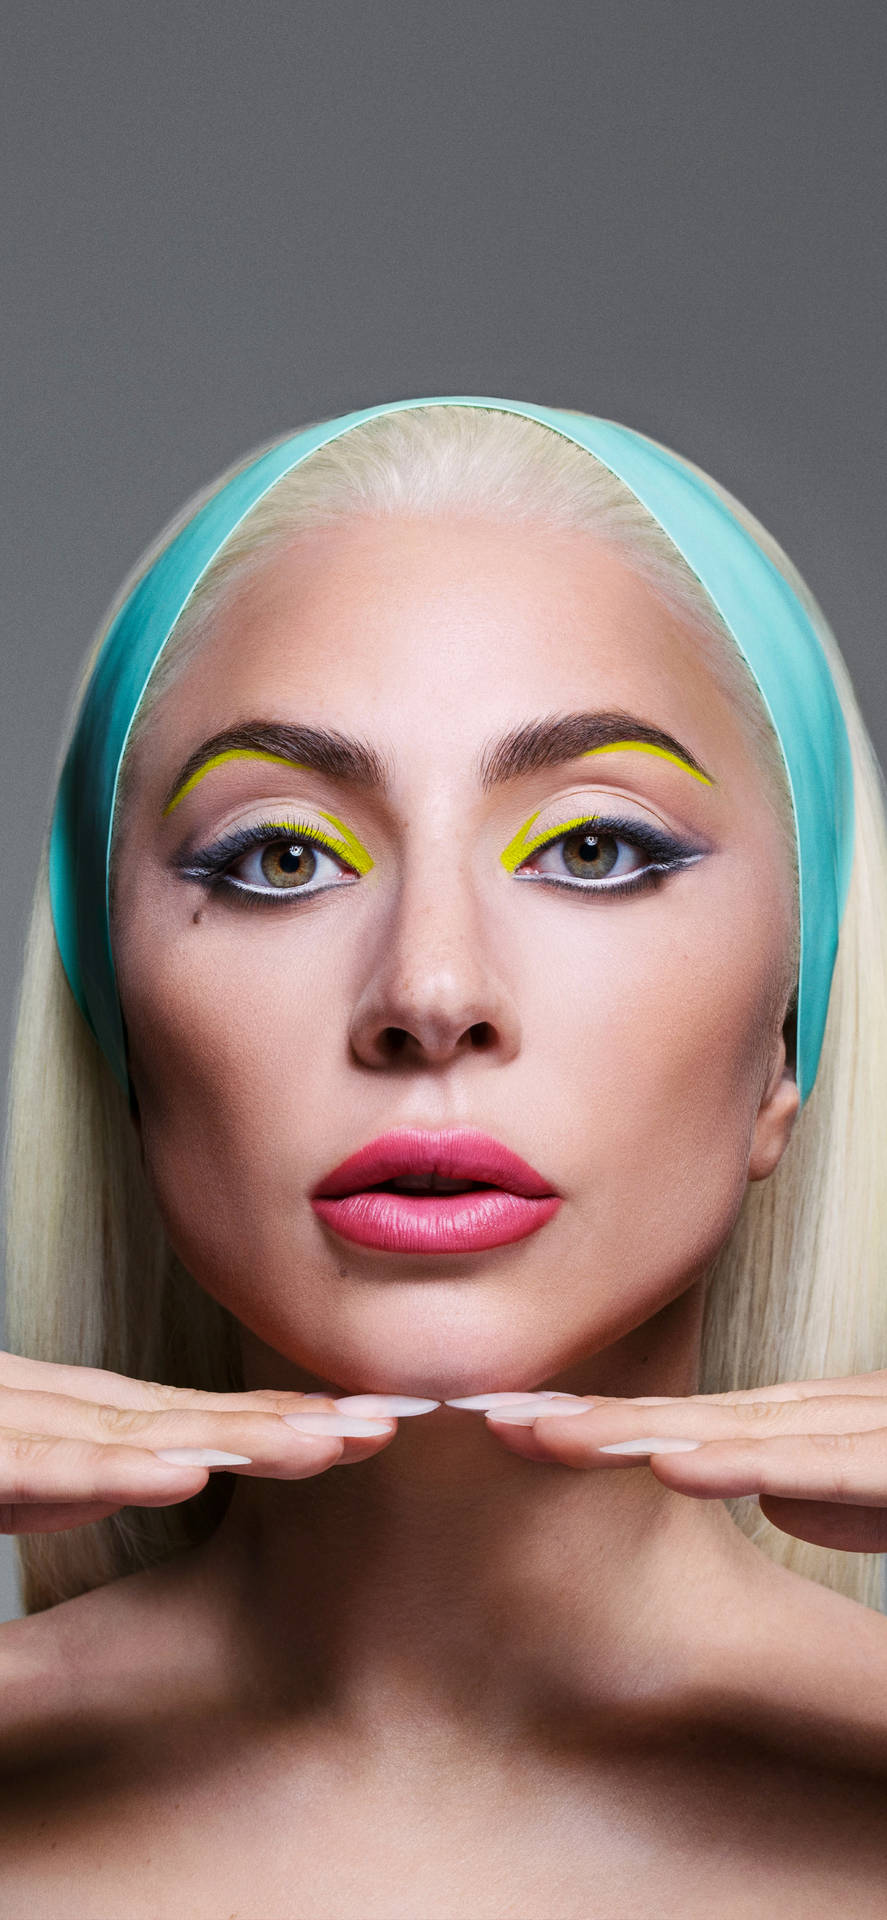 Lady Gaga Singer Celebrity Portrait